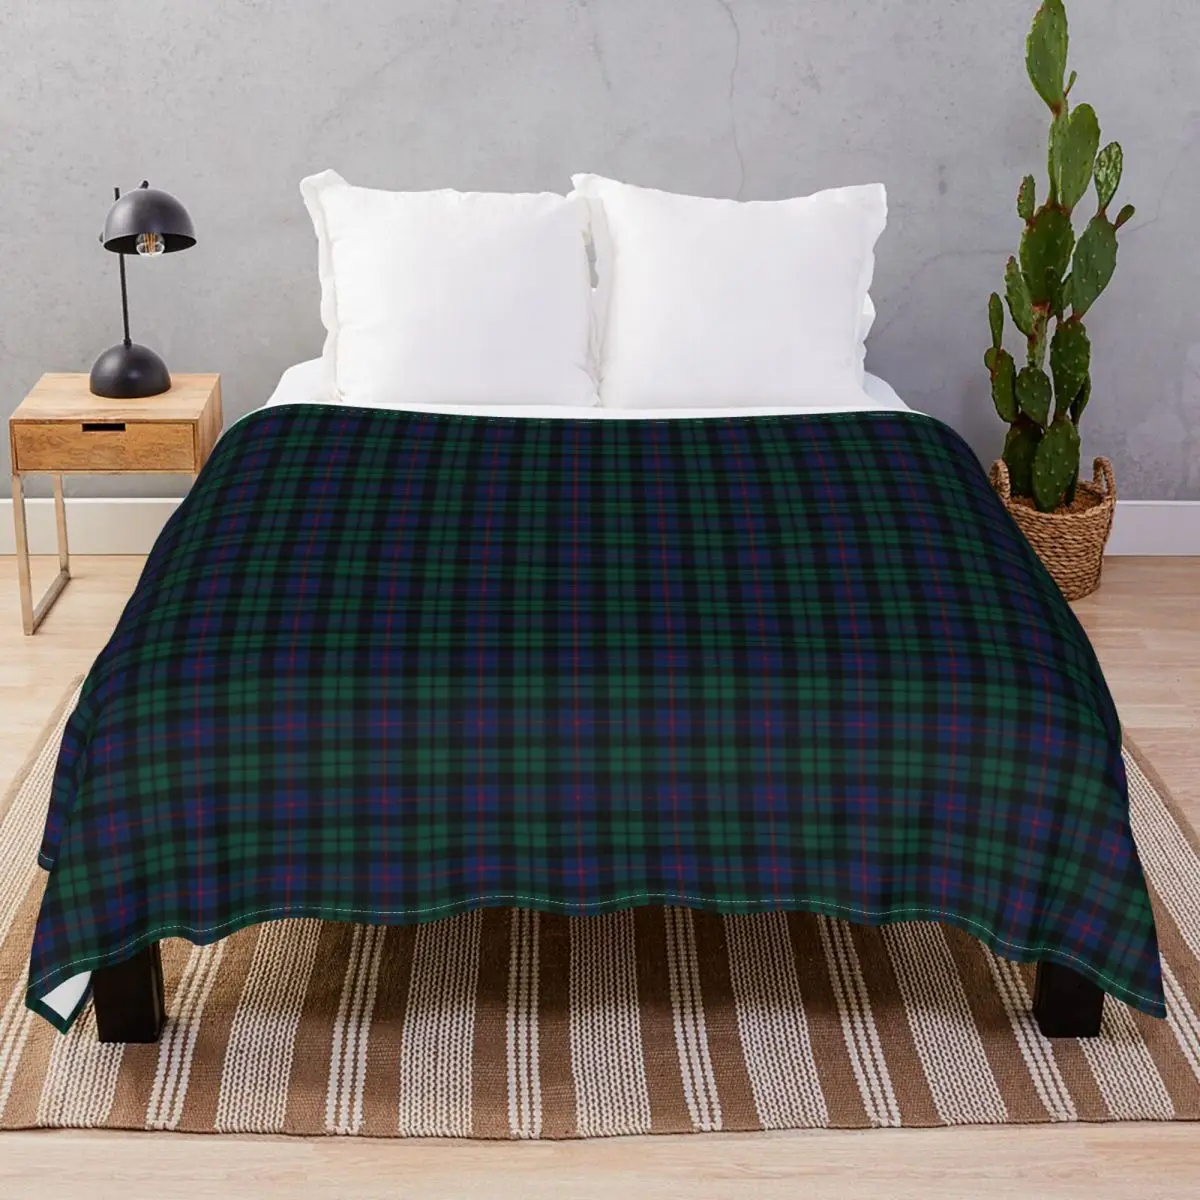 Clan Morrison Tartan Blankets Fleece Plush Print Super Soft Throw Blanket for Bedding Home Couch Camp Cinema